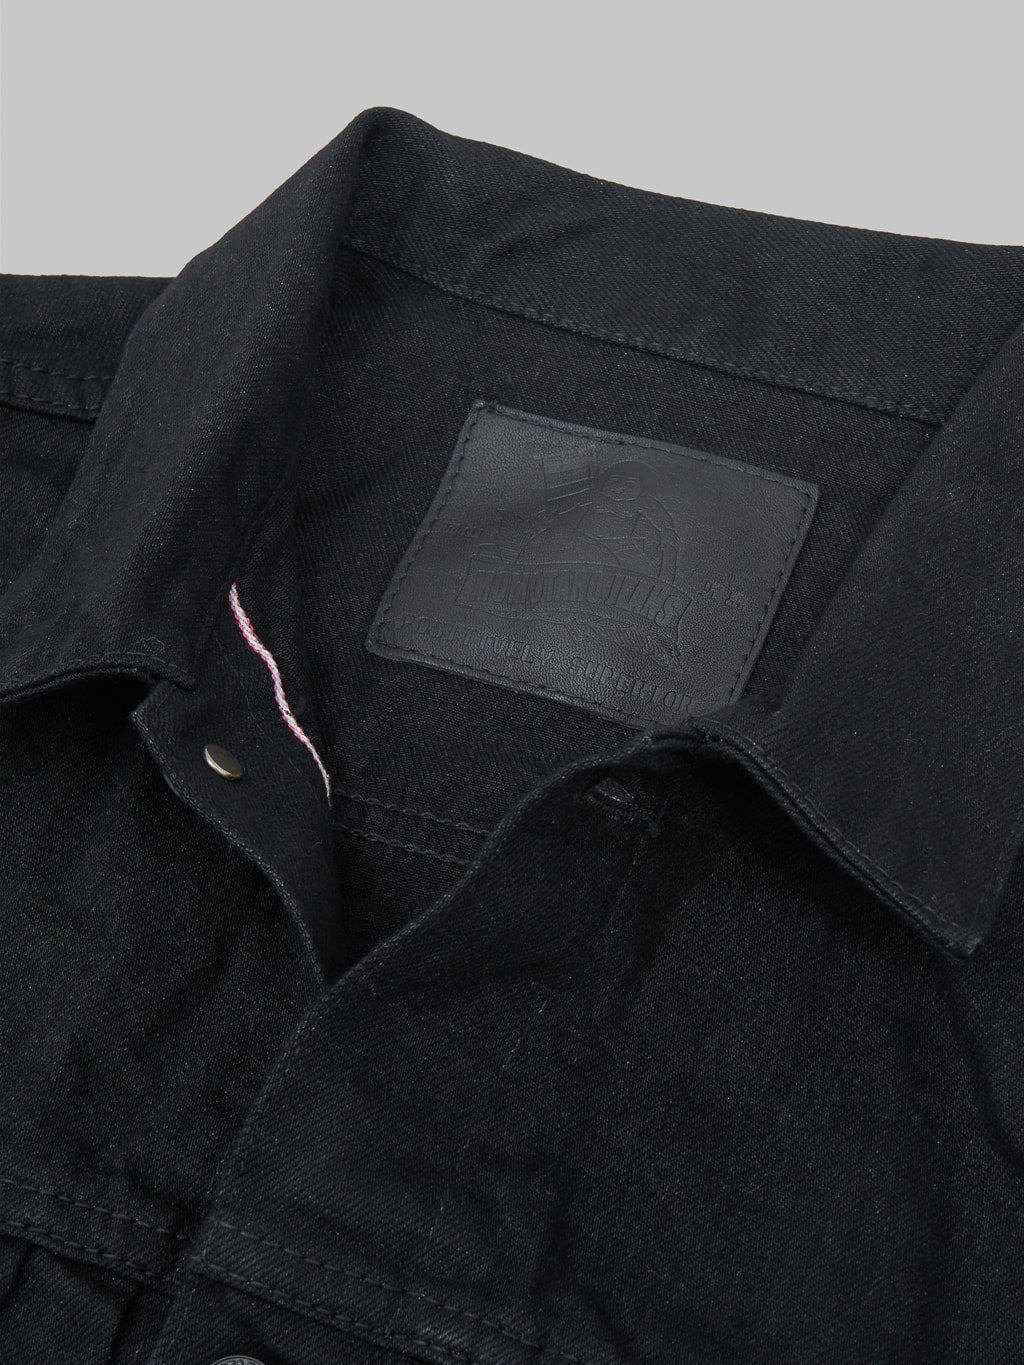 Momotaro MXGJ1108 Black x Black Type II Jacket  leather patch